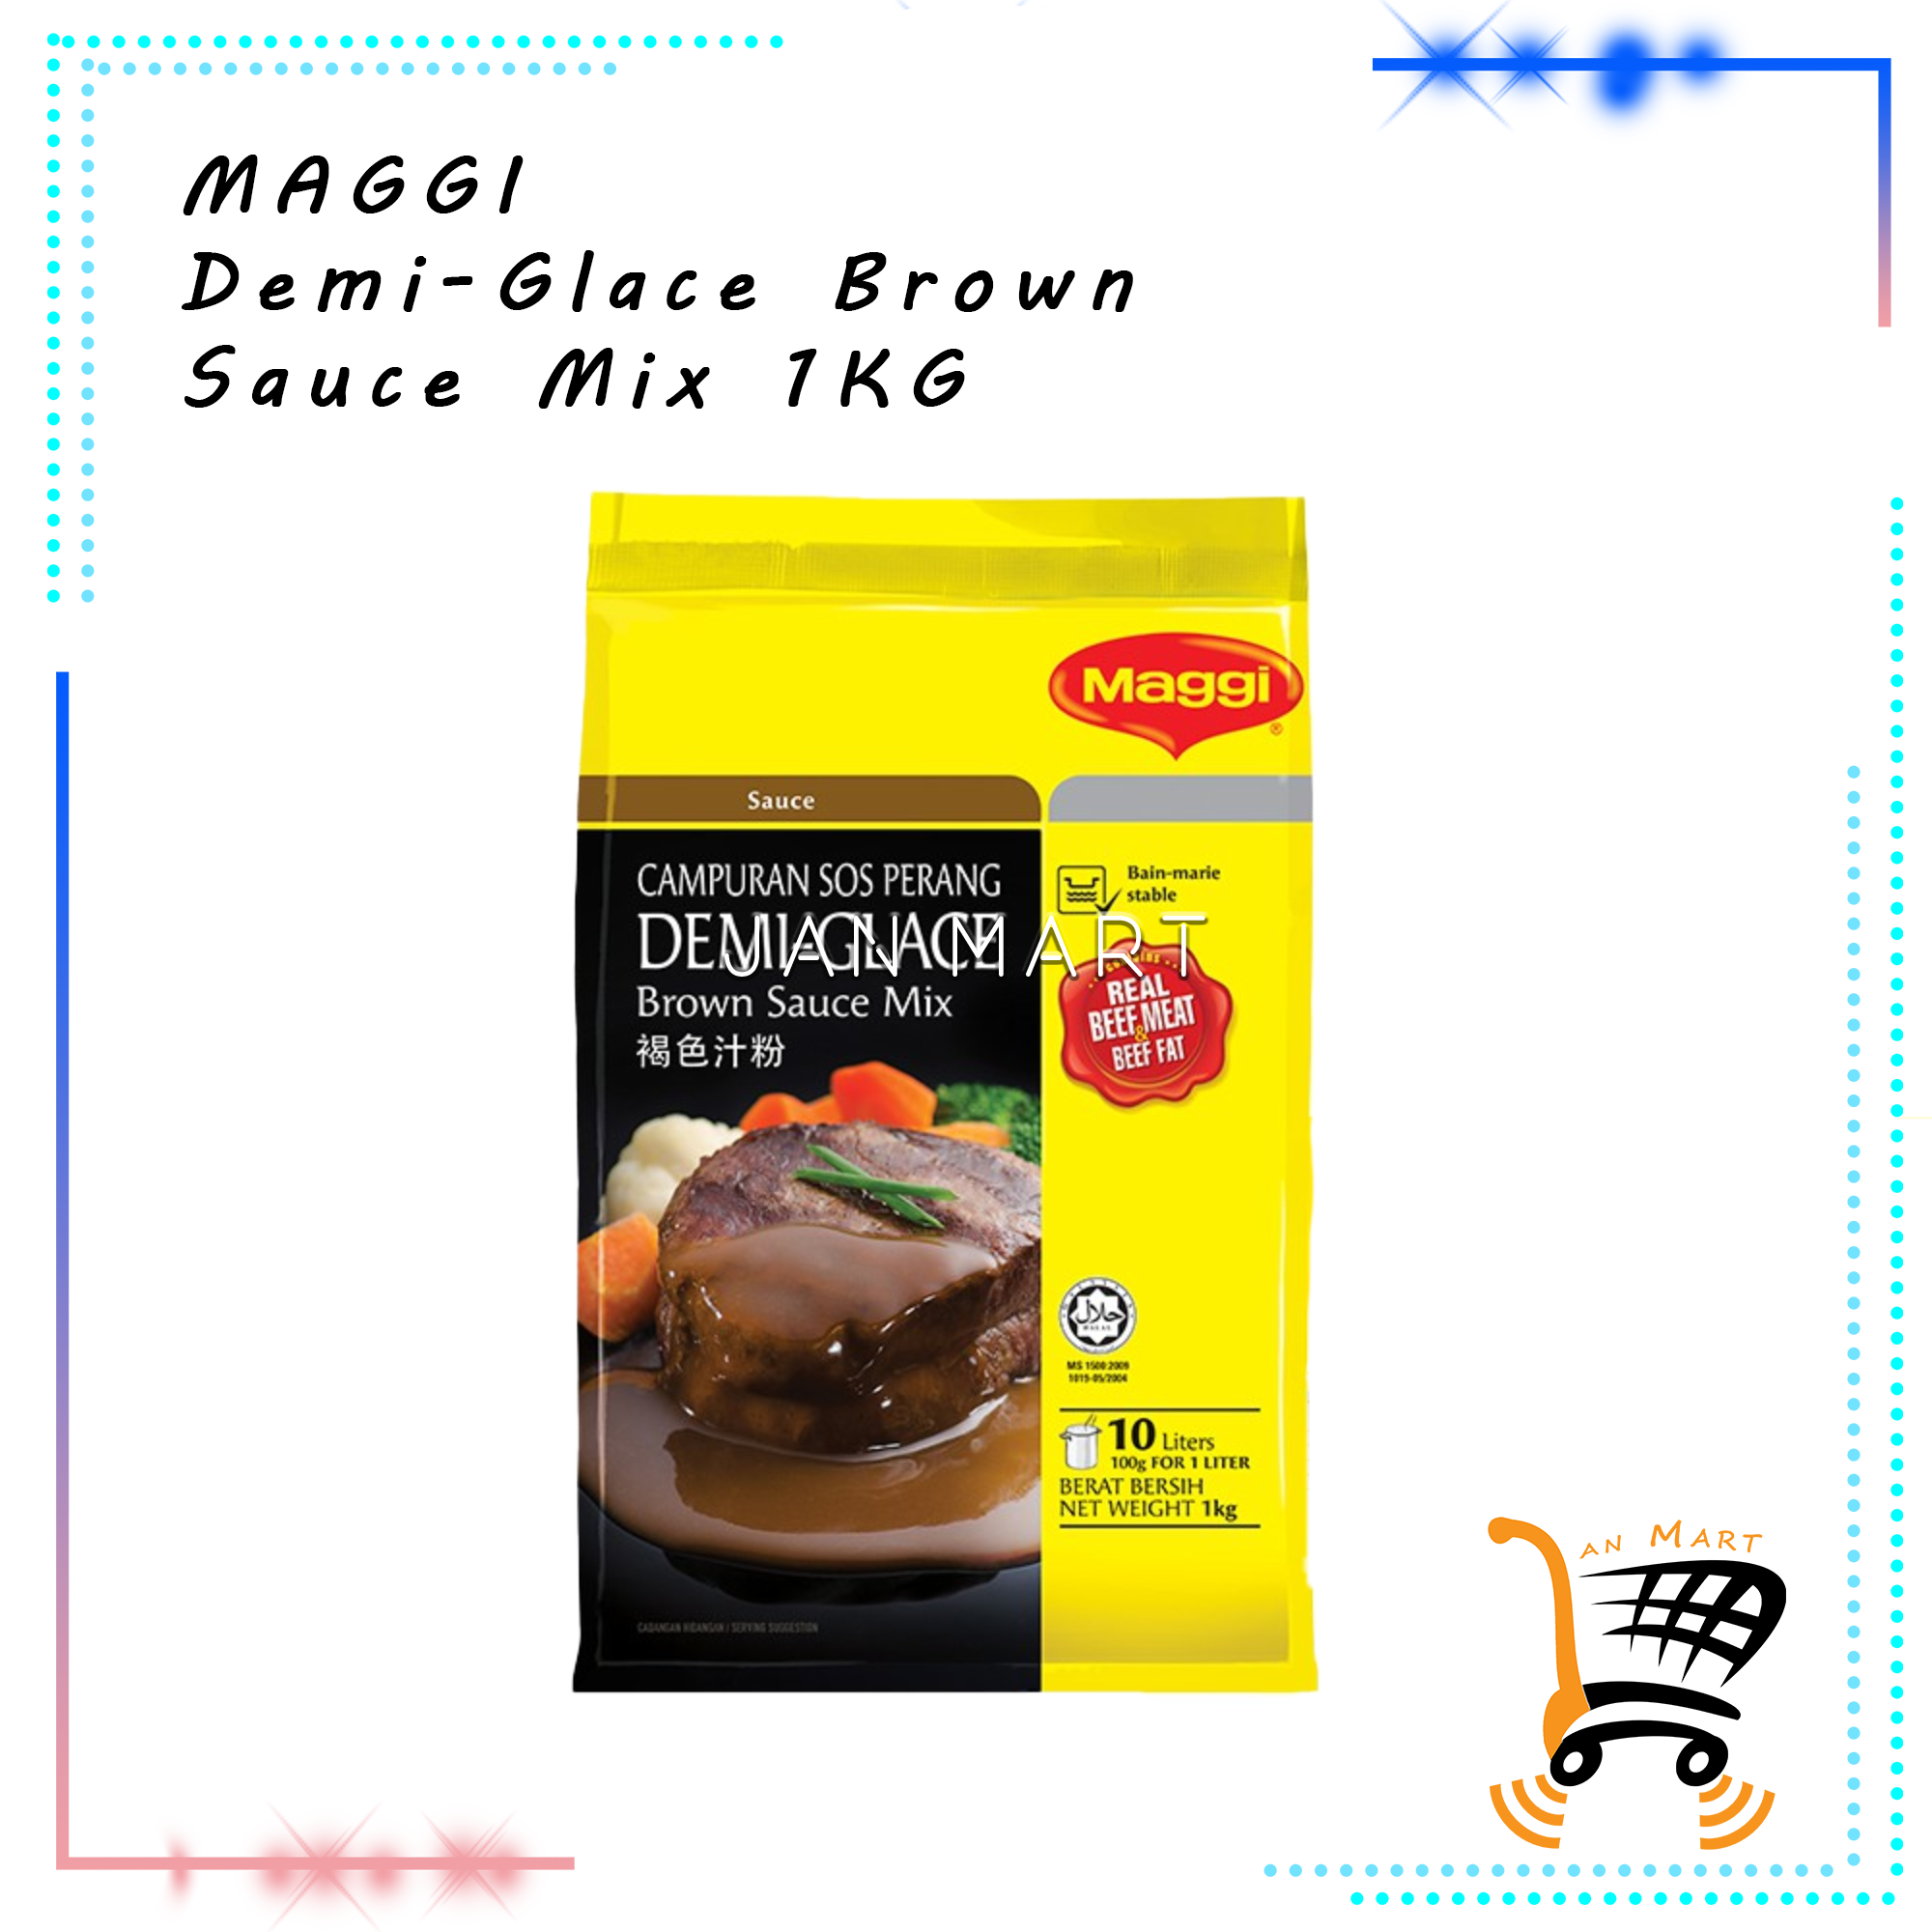 MAGGI Demi-Glace Brown Sauce Mix 1KG